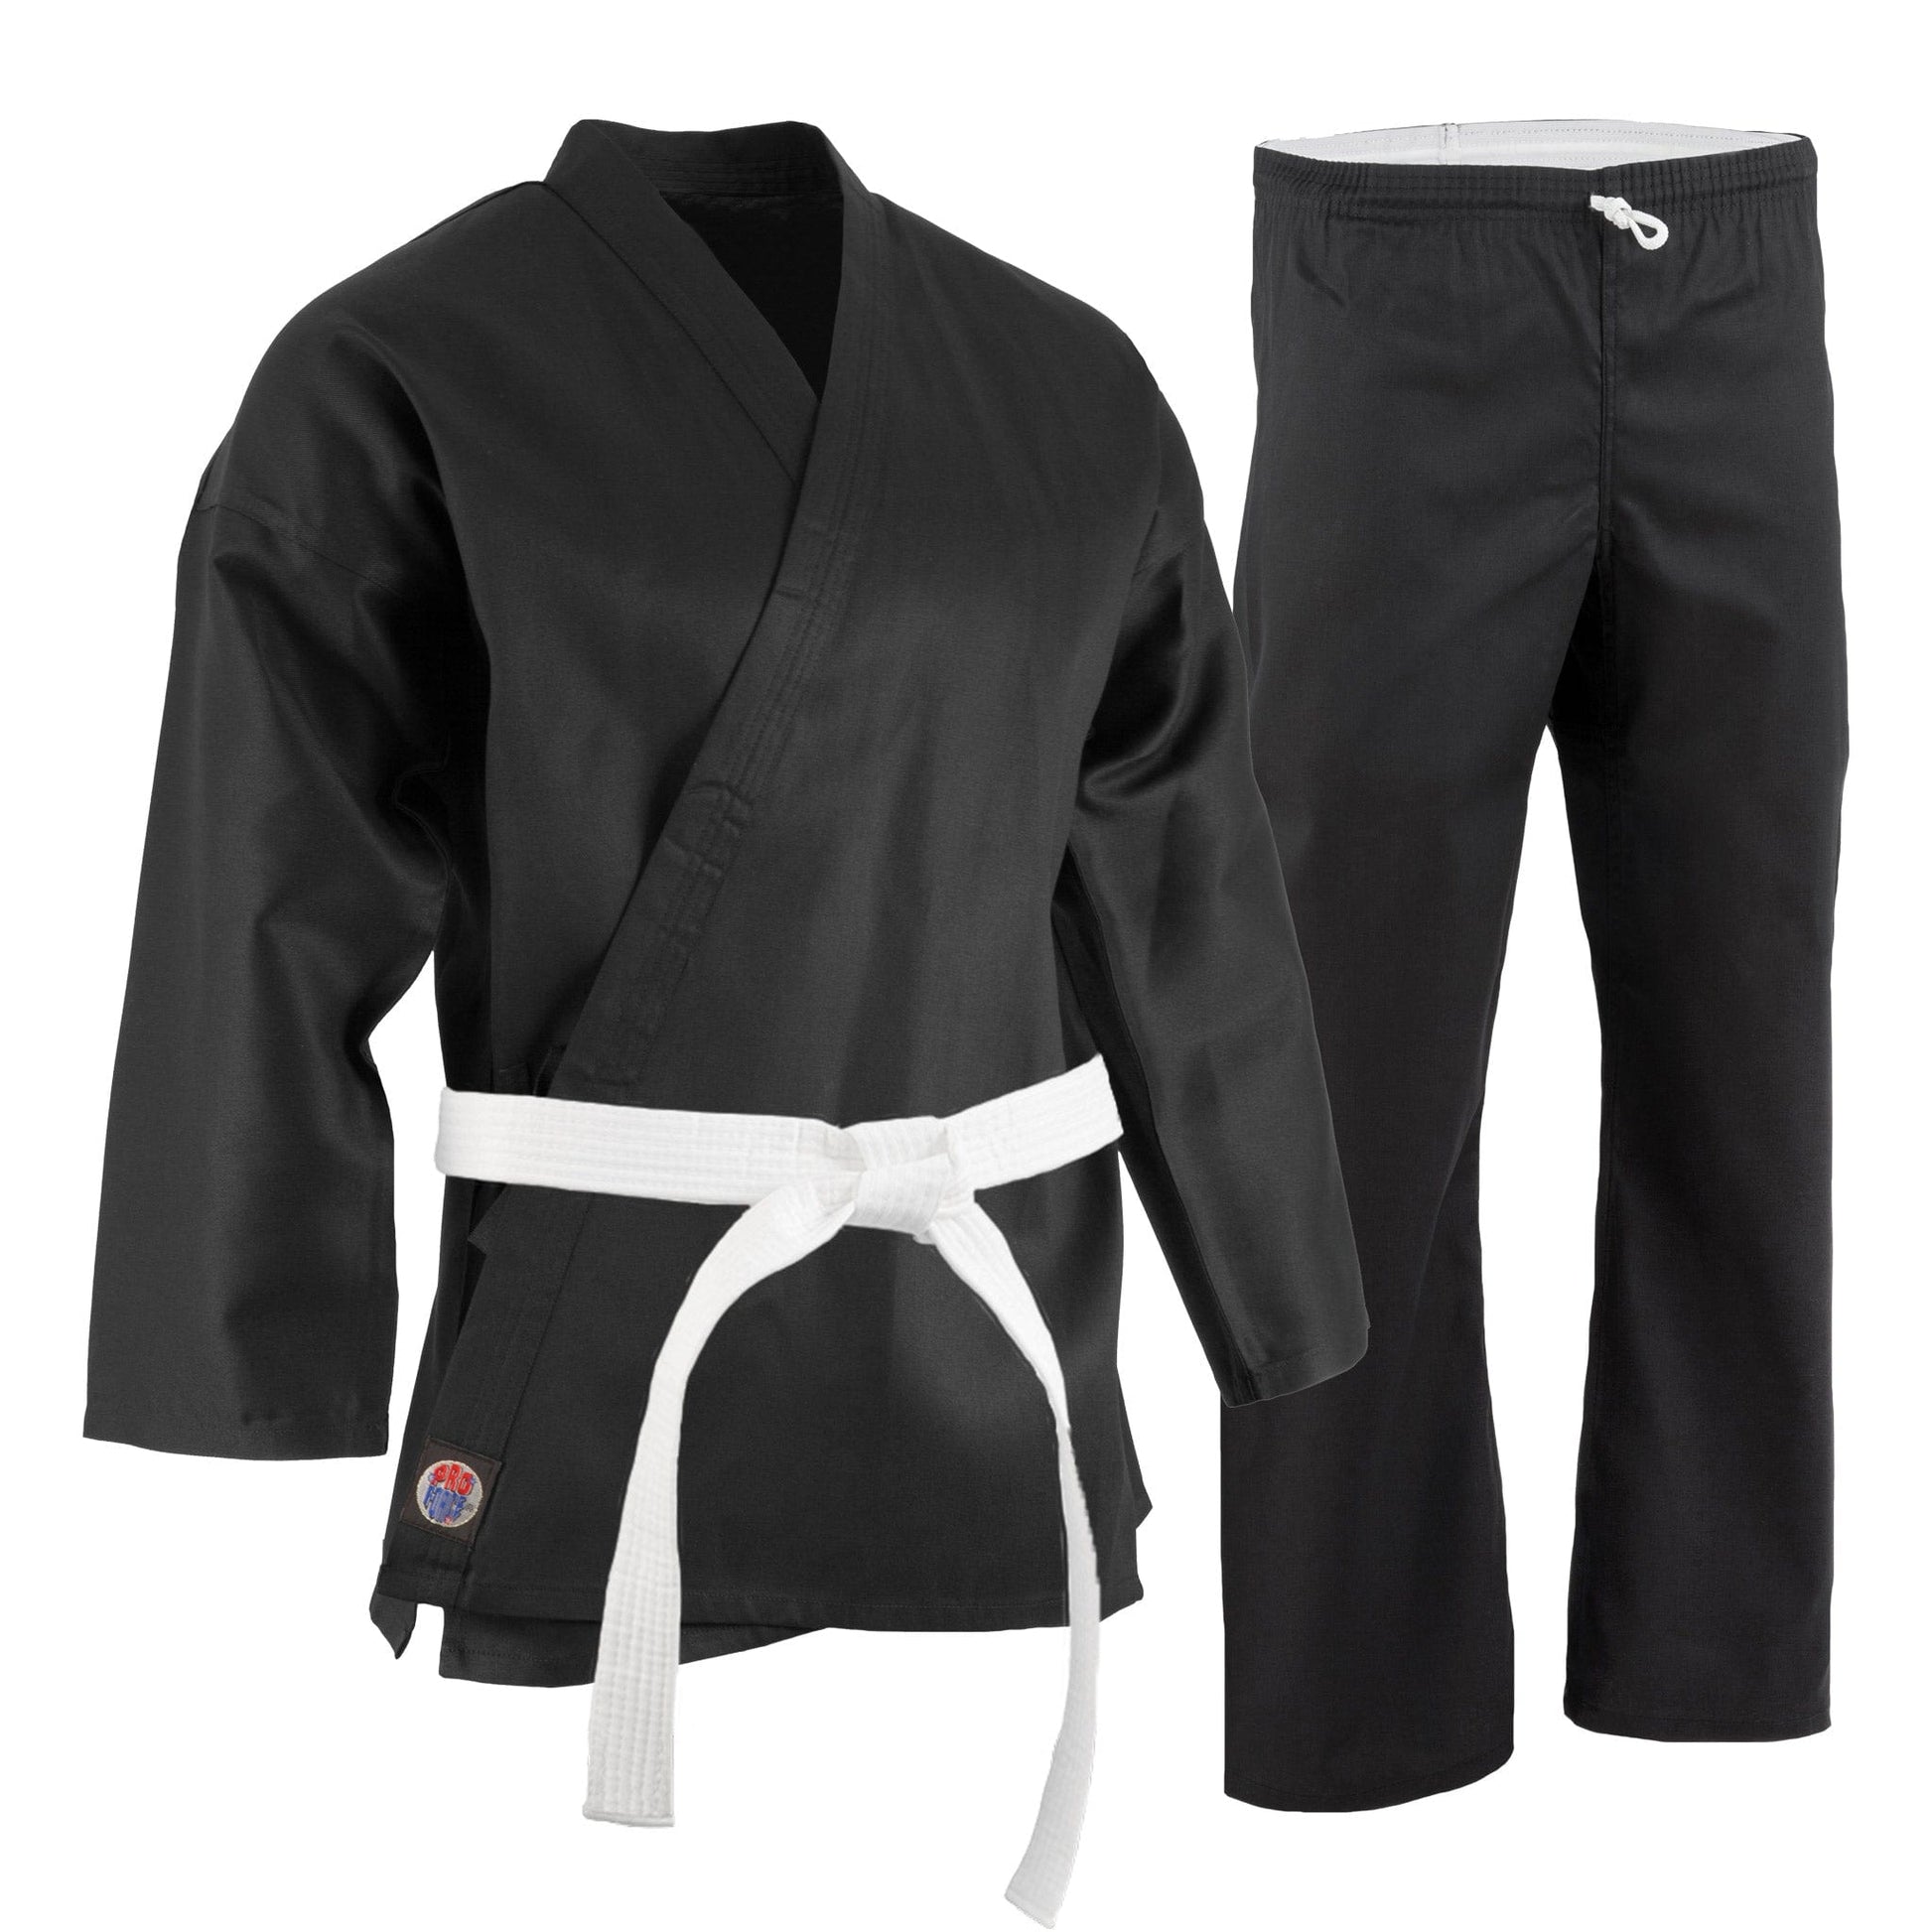 ProForce Karate Uniform Black / 0000 ch xxx-small ProForce 6 oz Karate Uniform Elastic Drawstring Pants poly cotton blend White